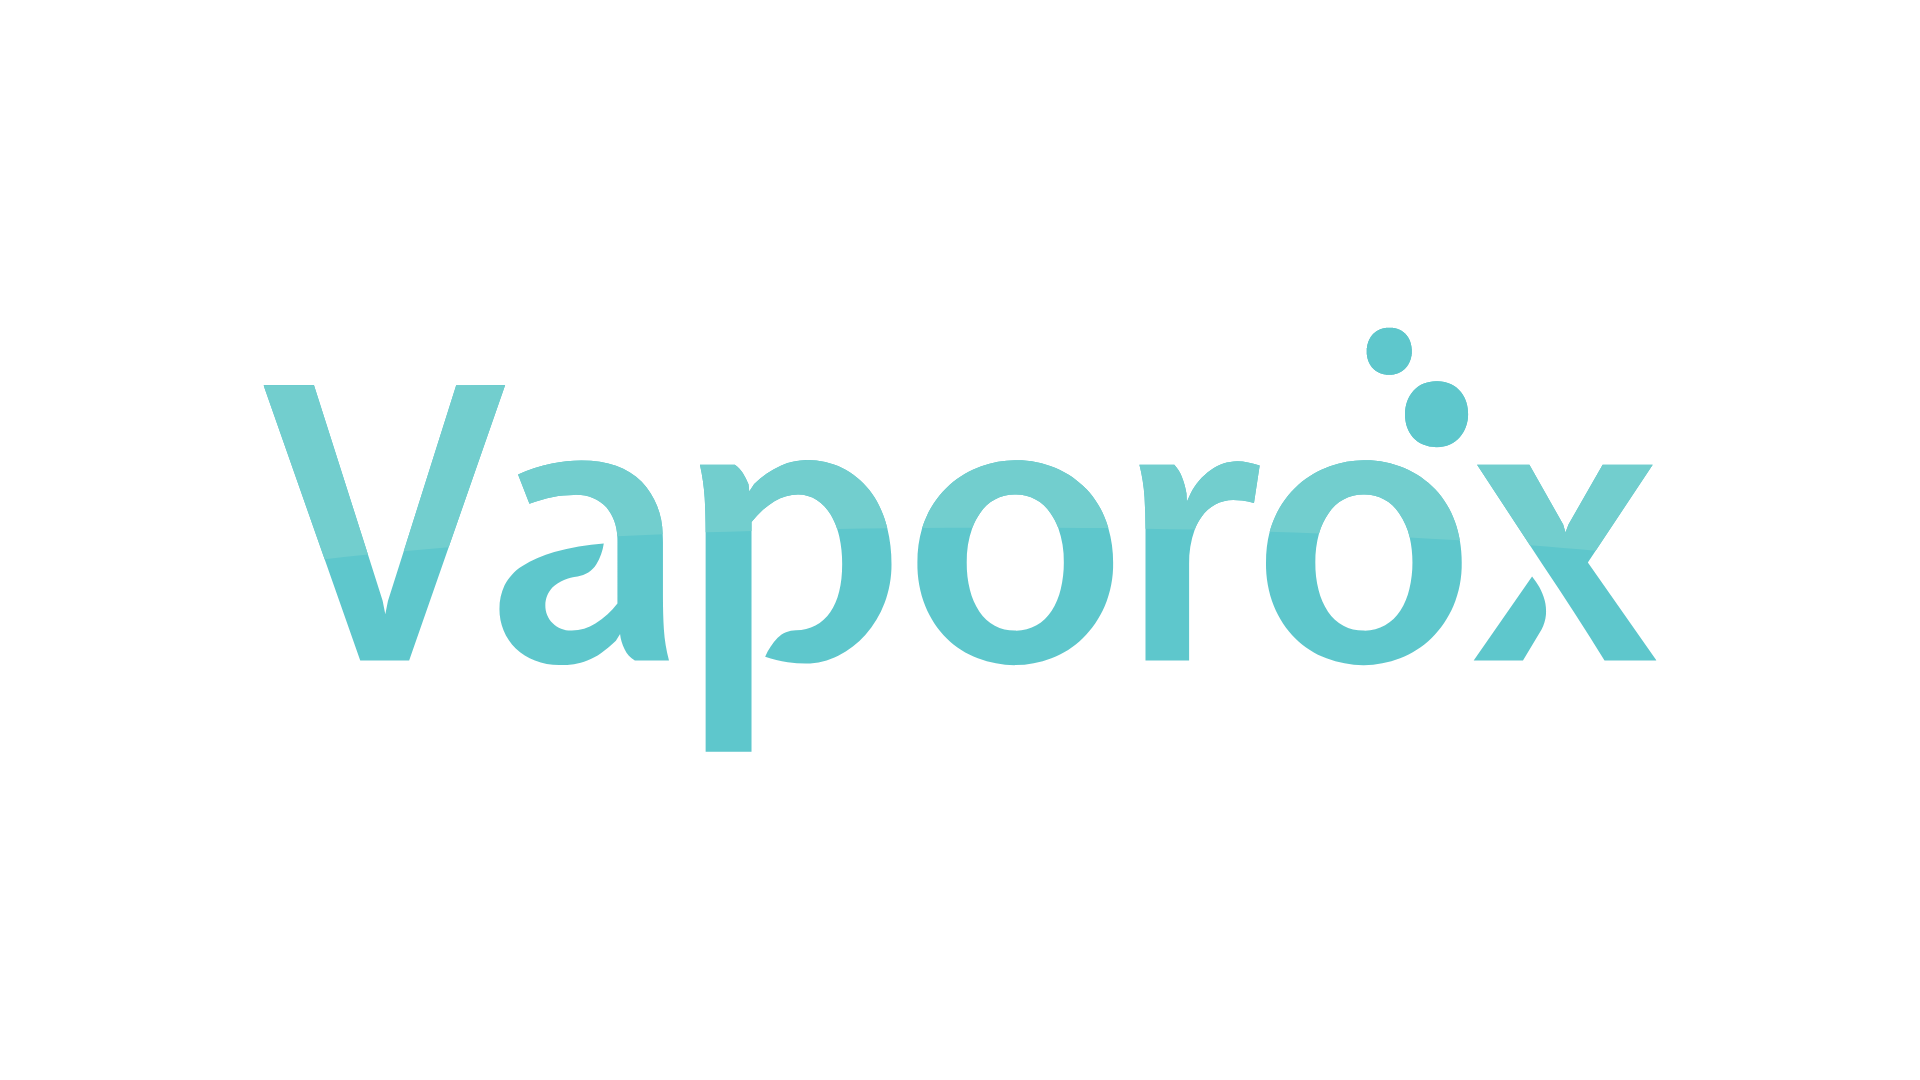 Vaporox